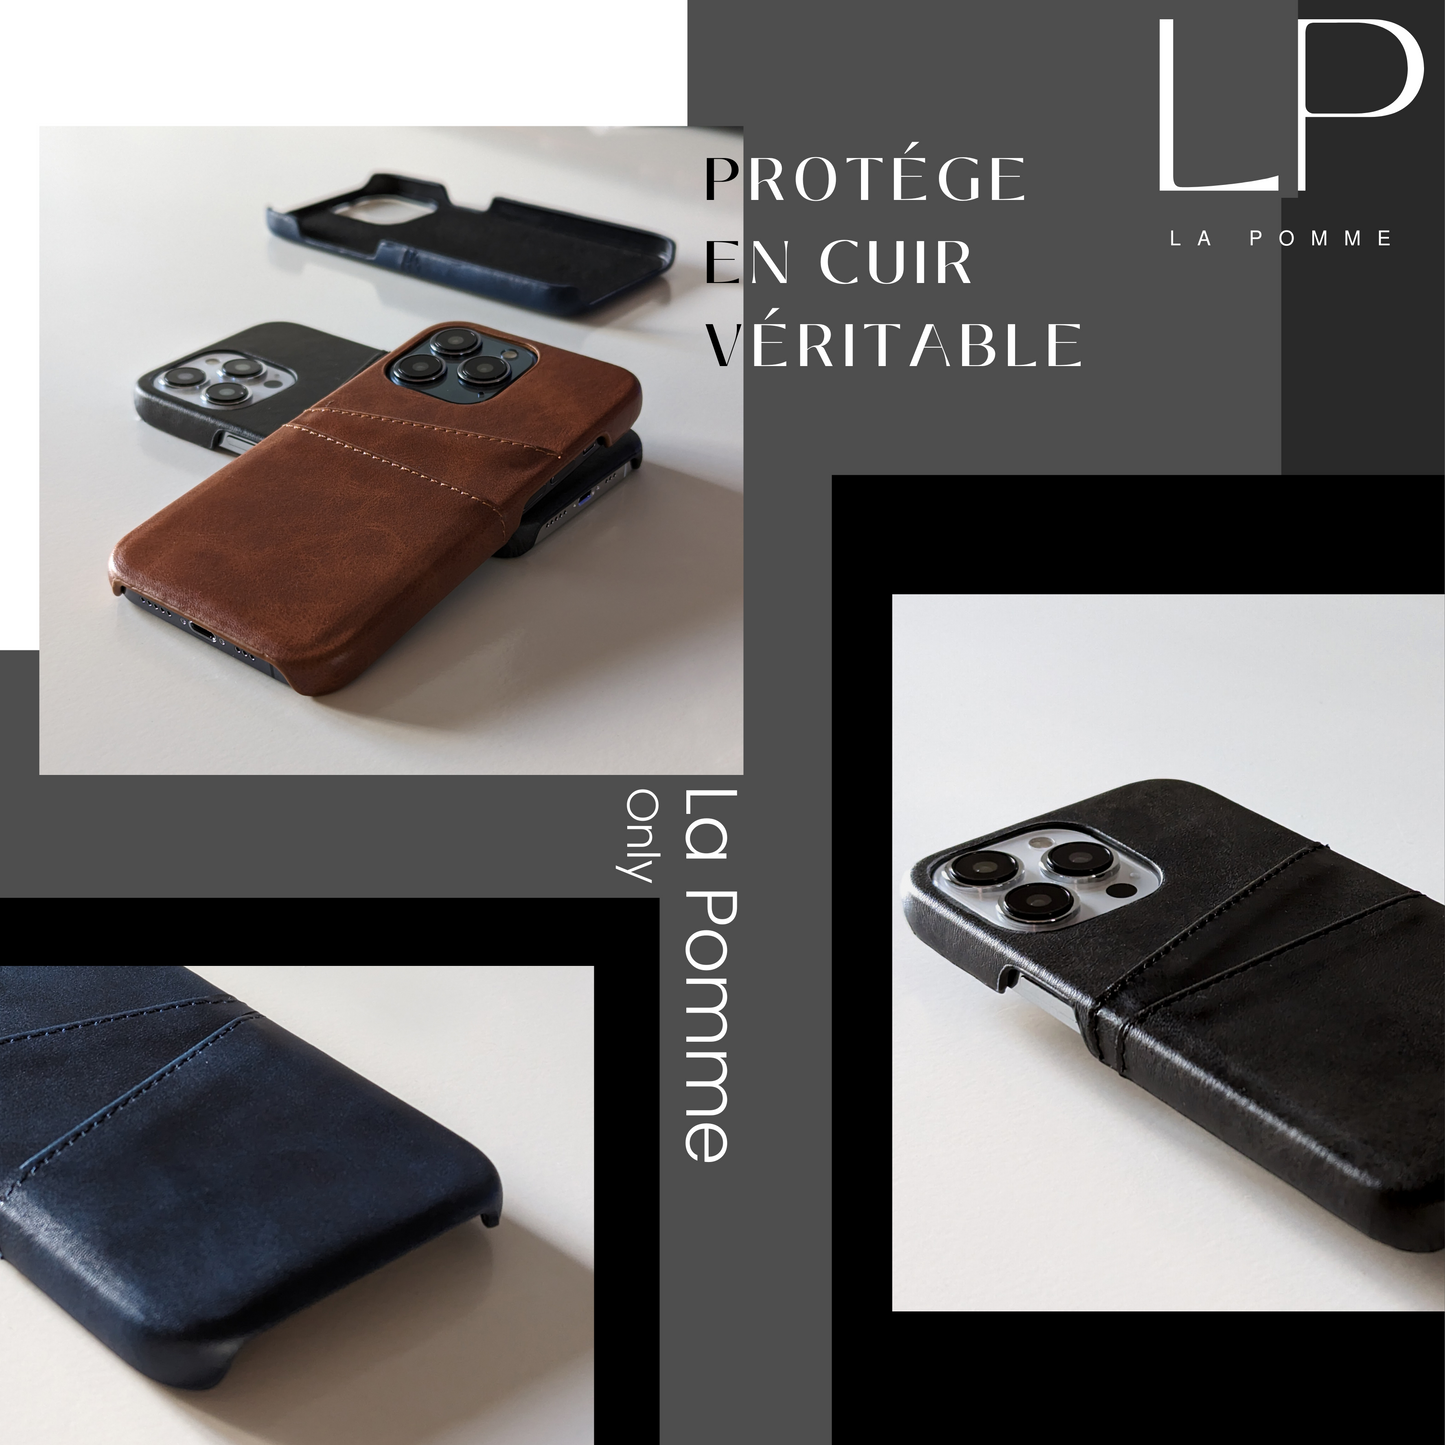 Coque iPhone 13 pro max en cuir véritable avec porte-cartes intégré / غطاء من الجلد 13 برو ماكس مع حامل بطاقات مُدمج